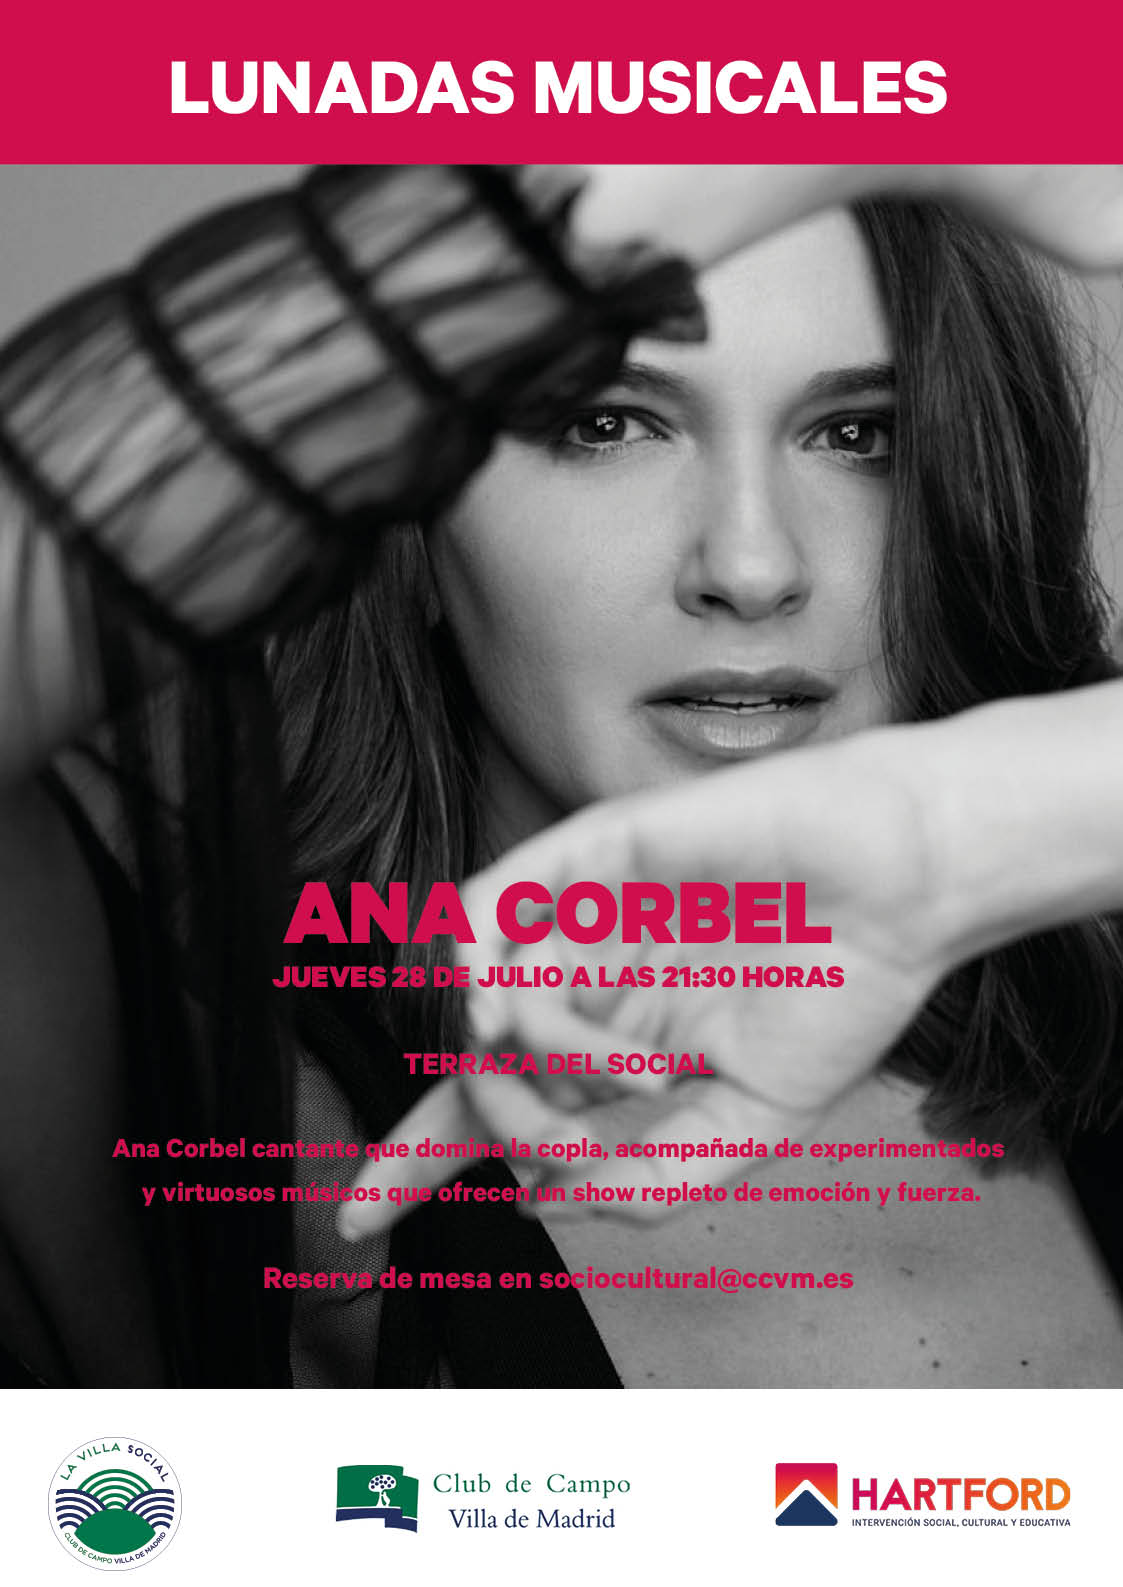 Lunadas Musicales - Ana Corbel